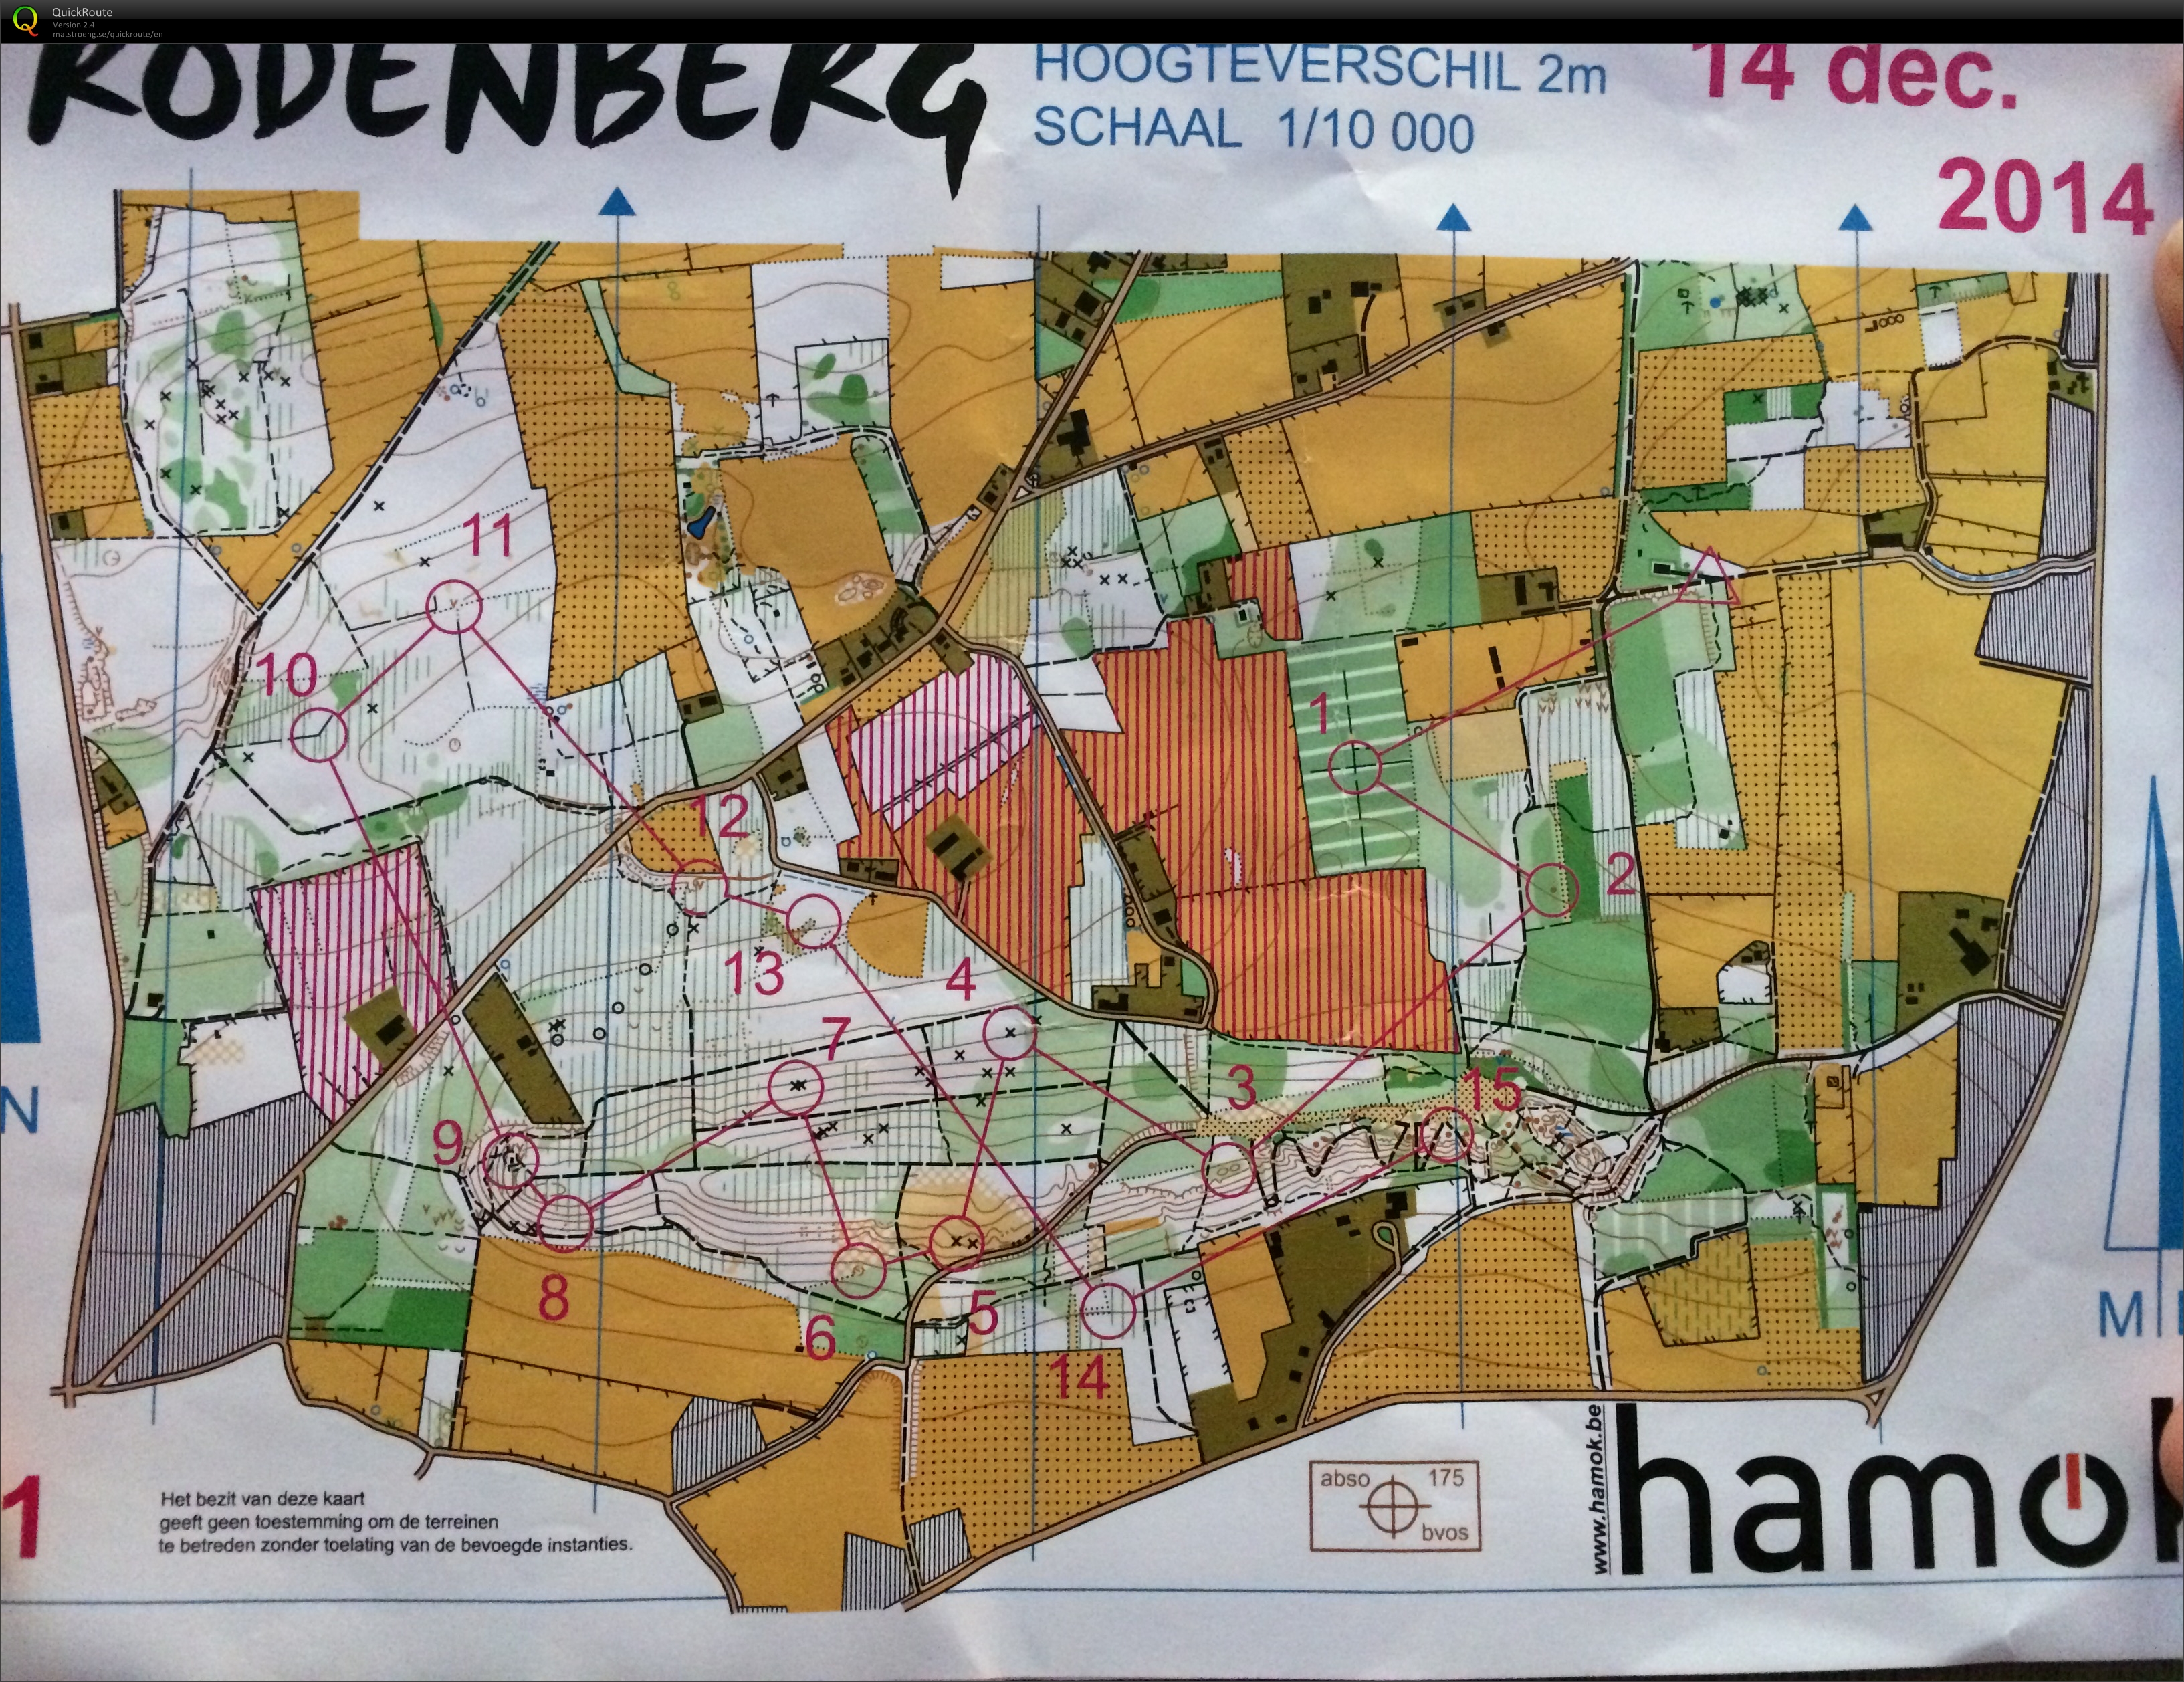 Rodenberg (14.12.2014)